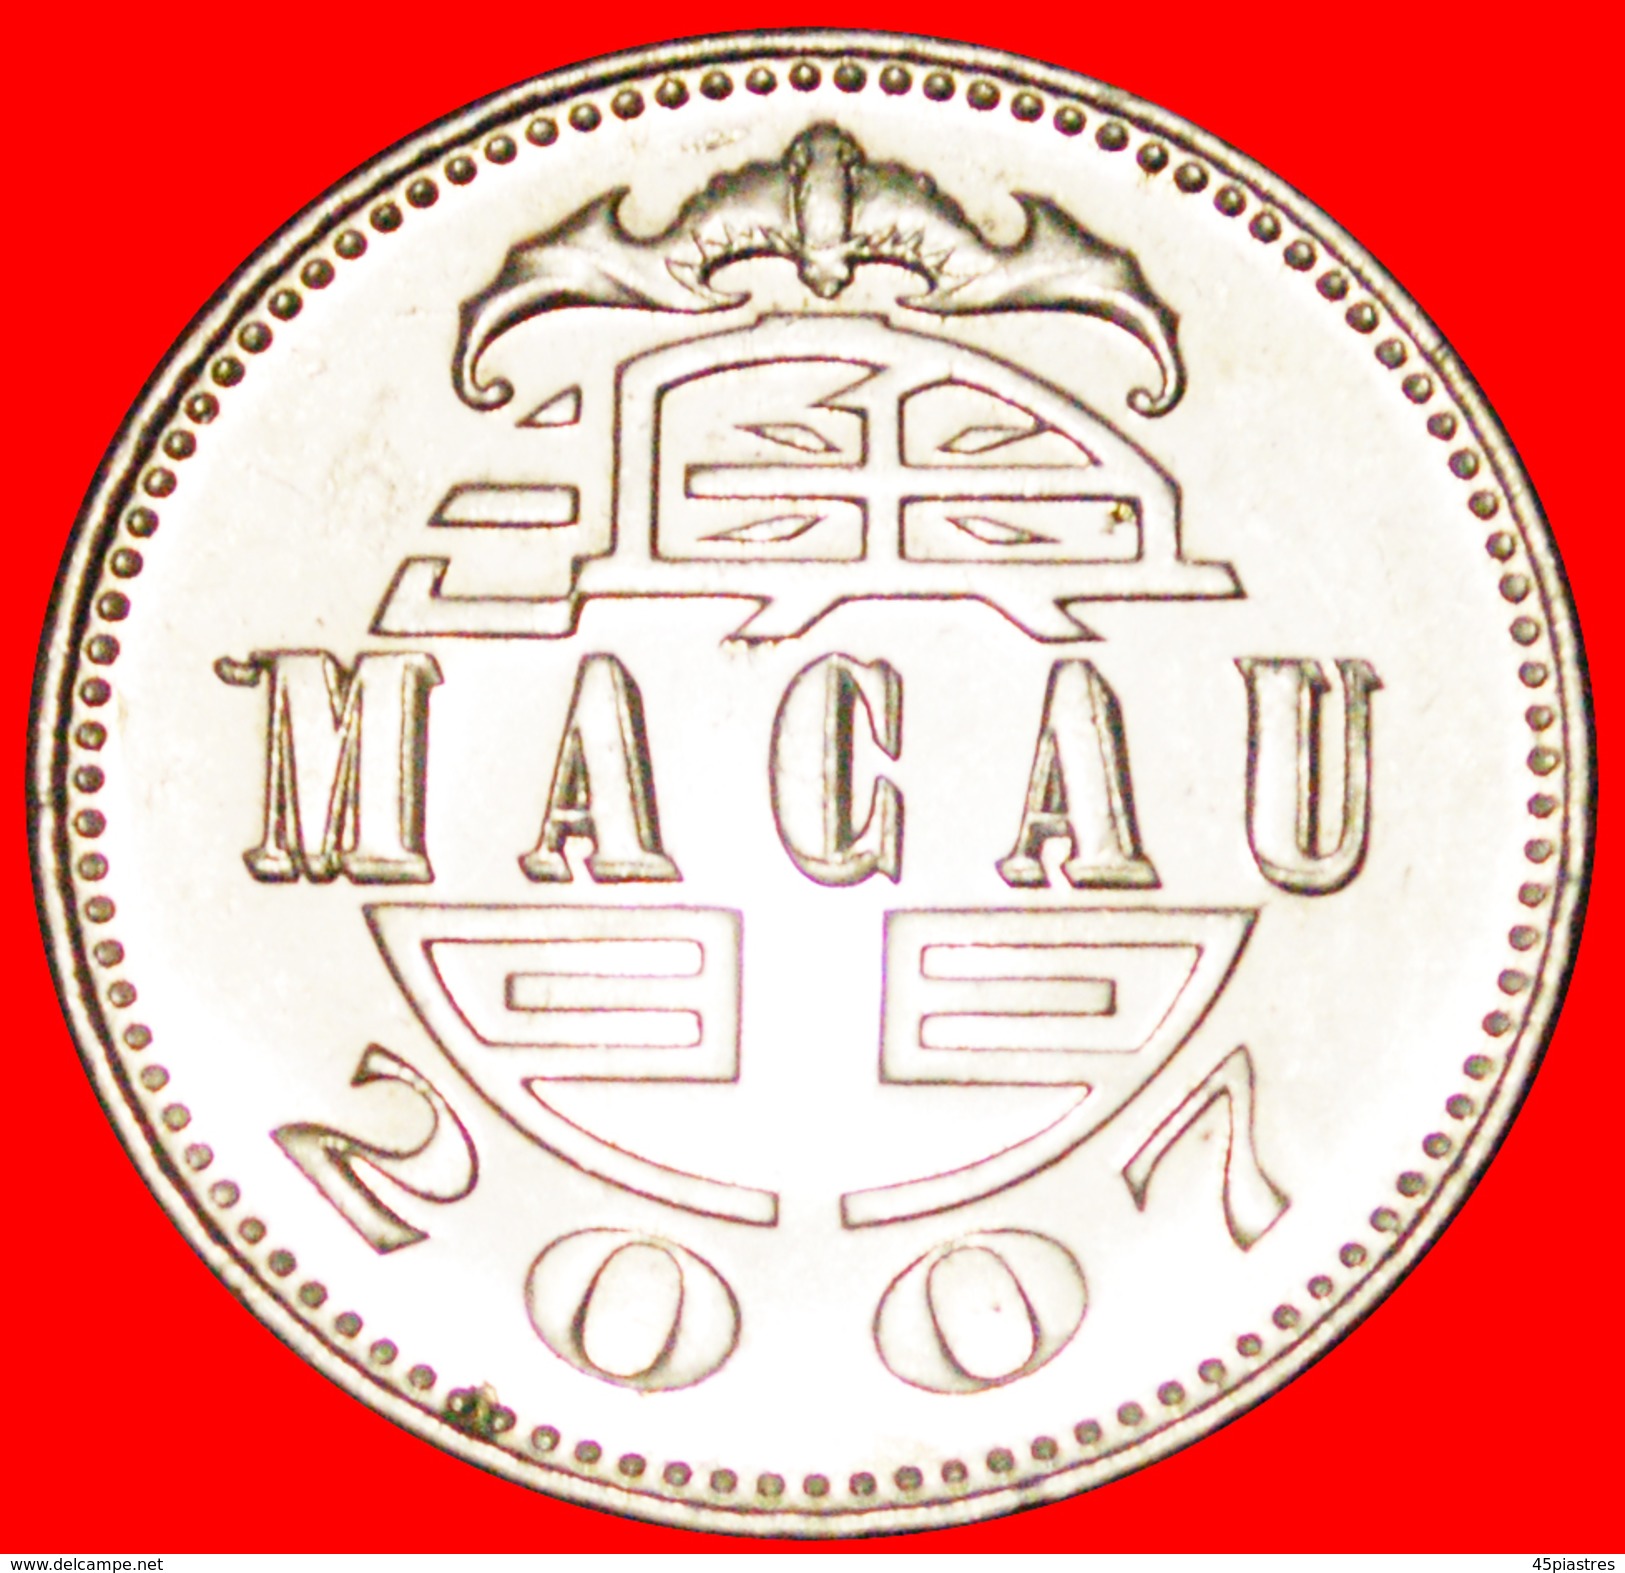 § CASTLE: MACAO★MACAU &#x2605;1 PATACA 2007 MINT LUSTER! LOW START&#x2605; NO RESERVE! - Macao